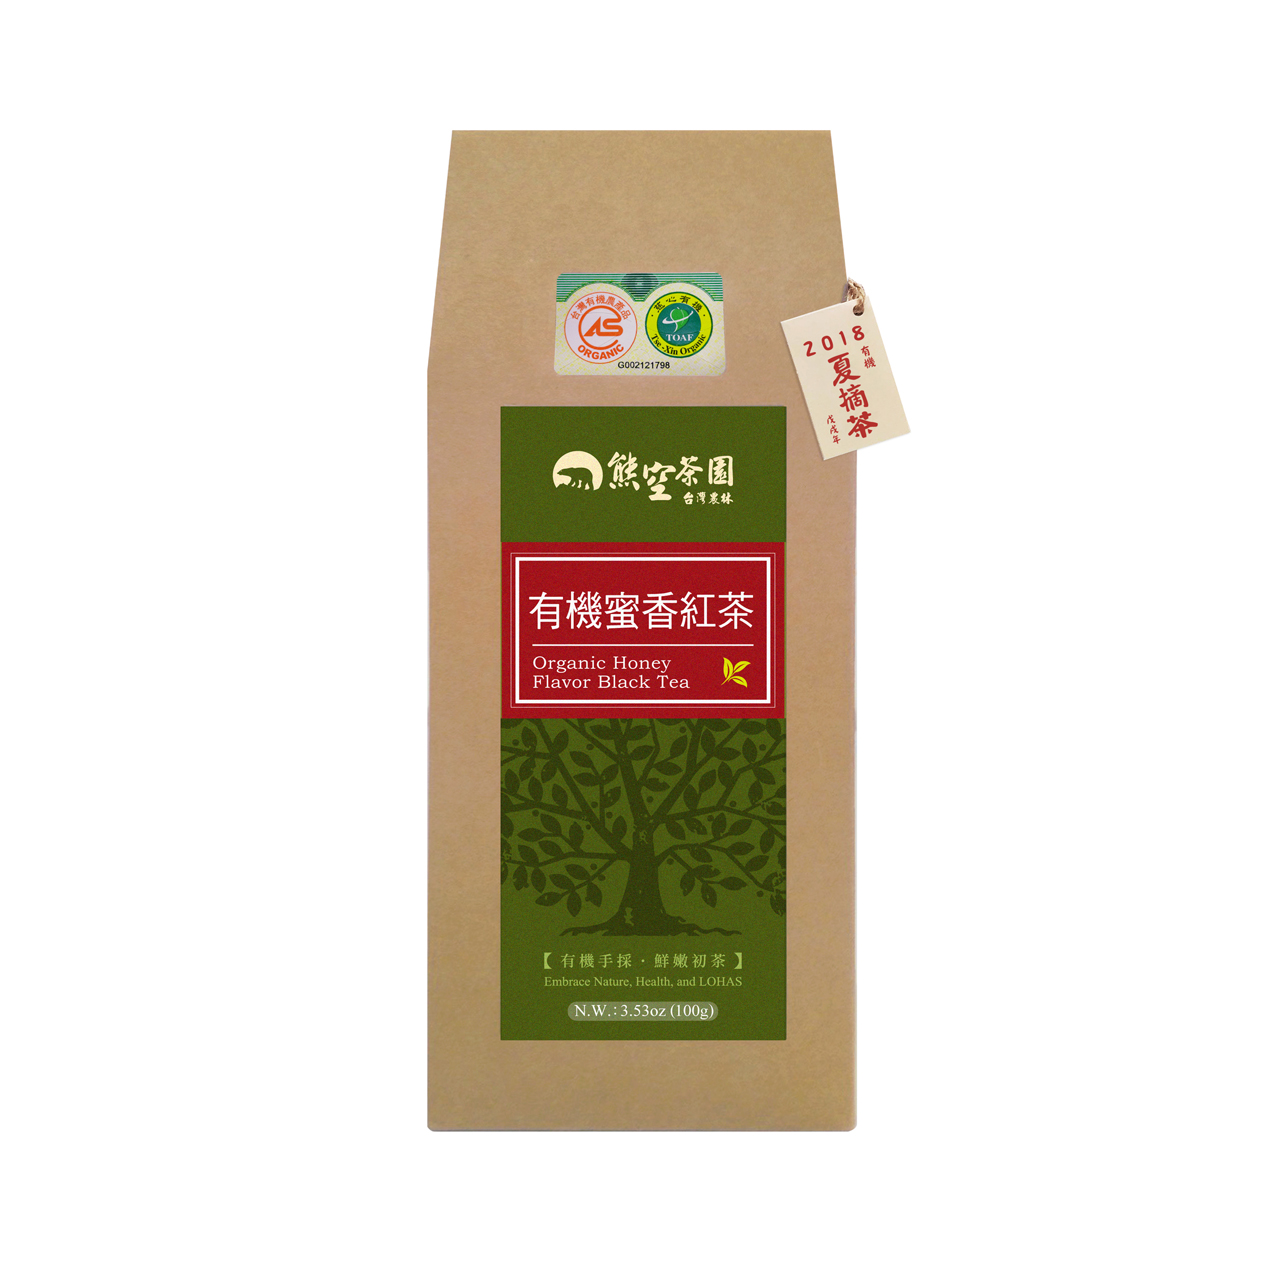 Xiongkong-Organi Honey Flavor Black Tea